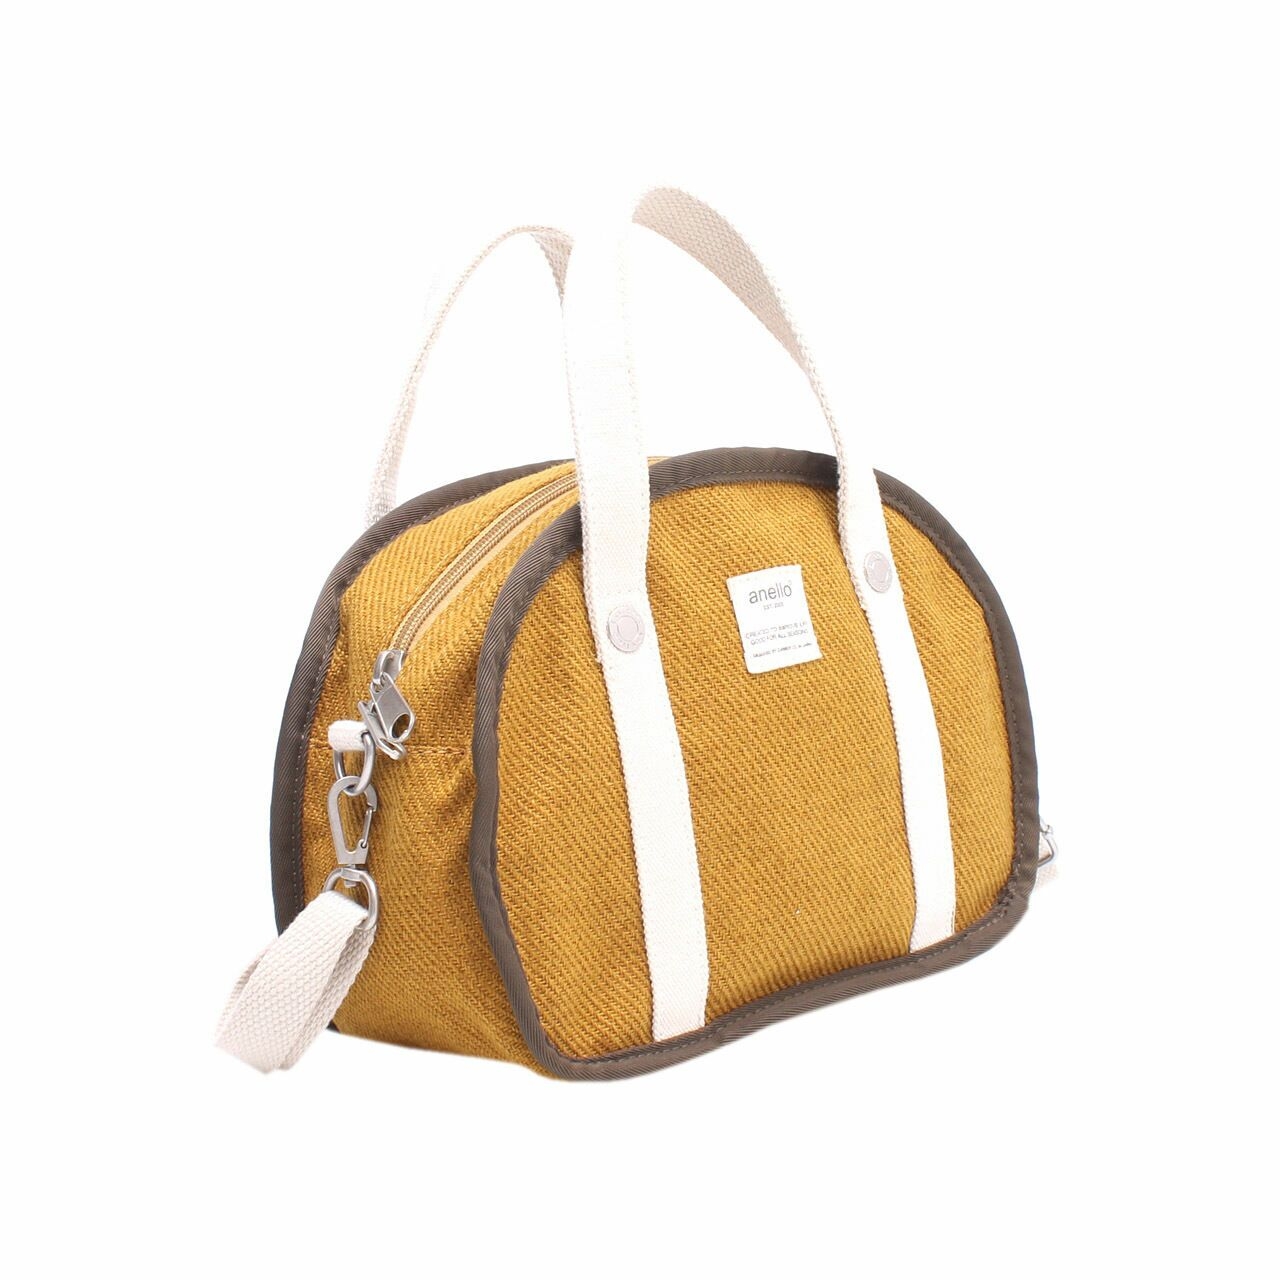 Anello Mustard Satchel Bag